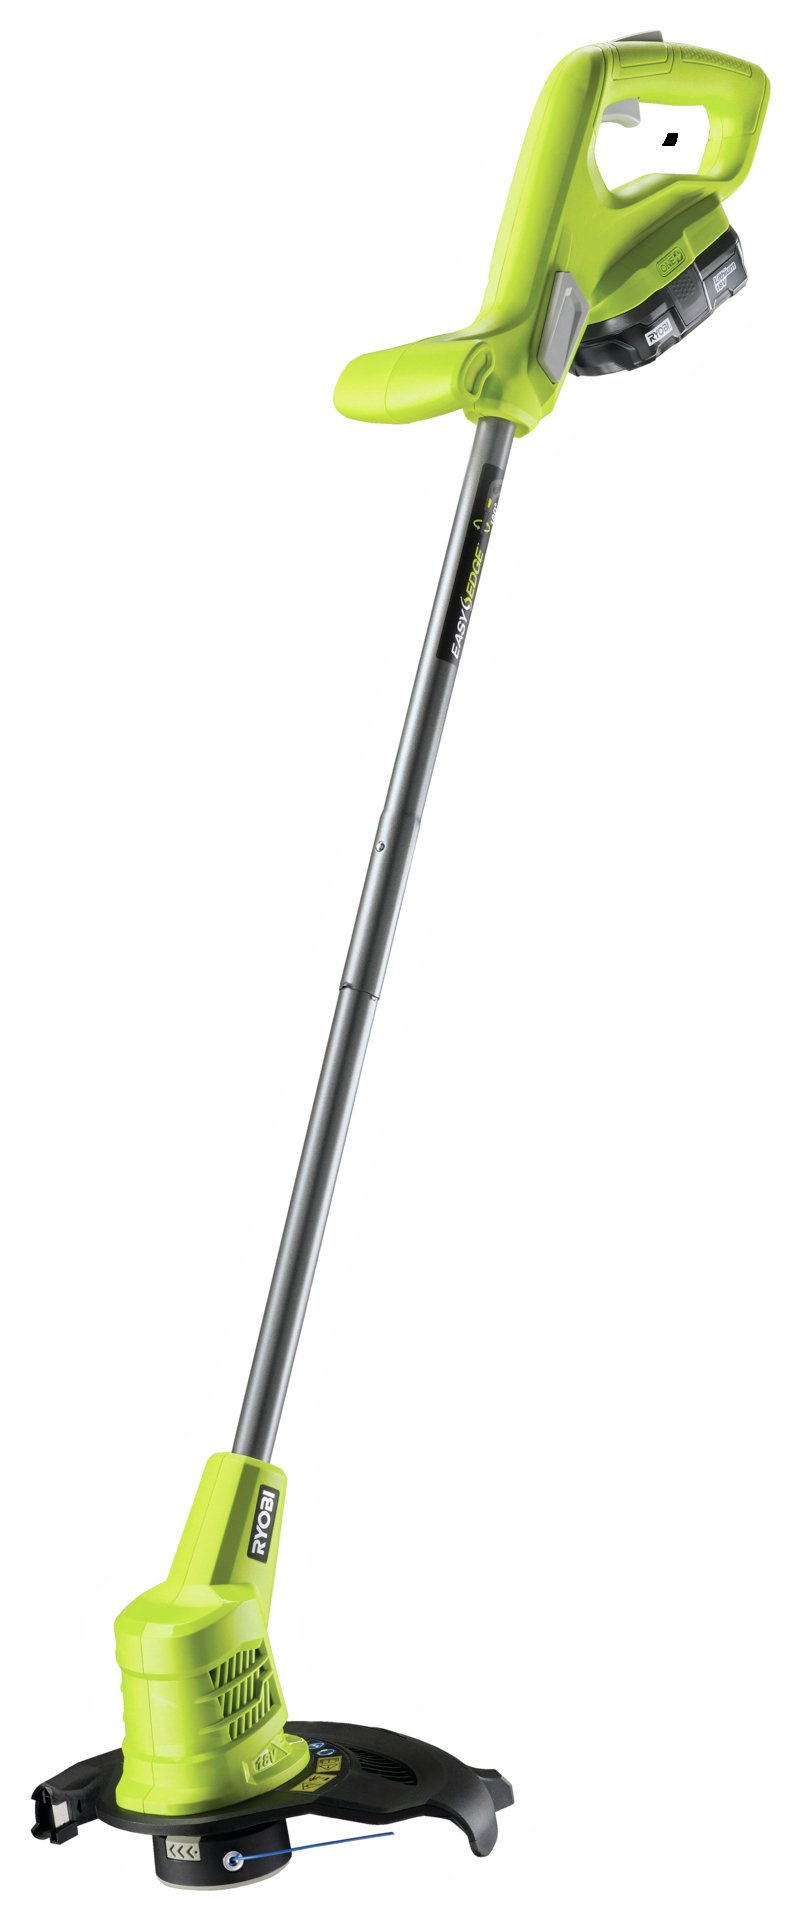 Ryobi RLT1825M13 25cm Cordless Grass Trimmer - 18V